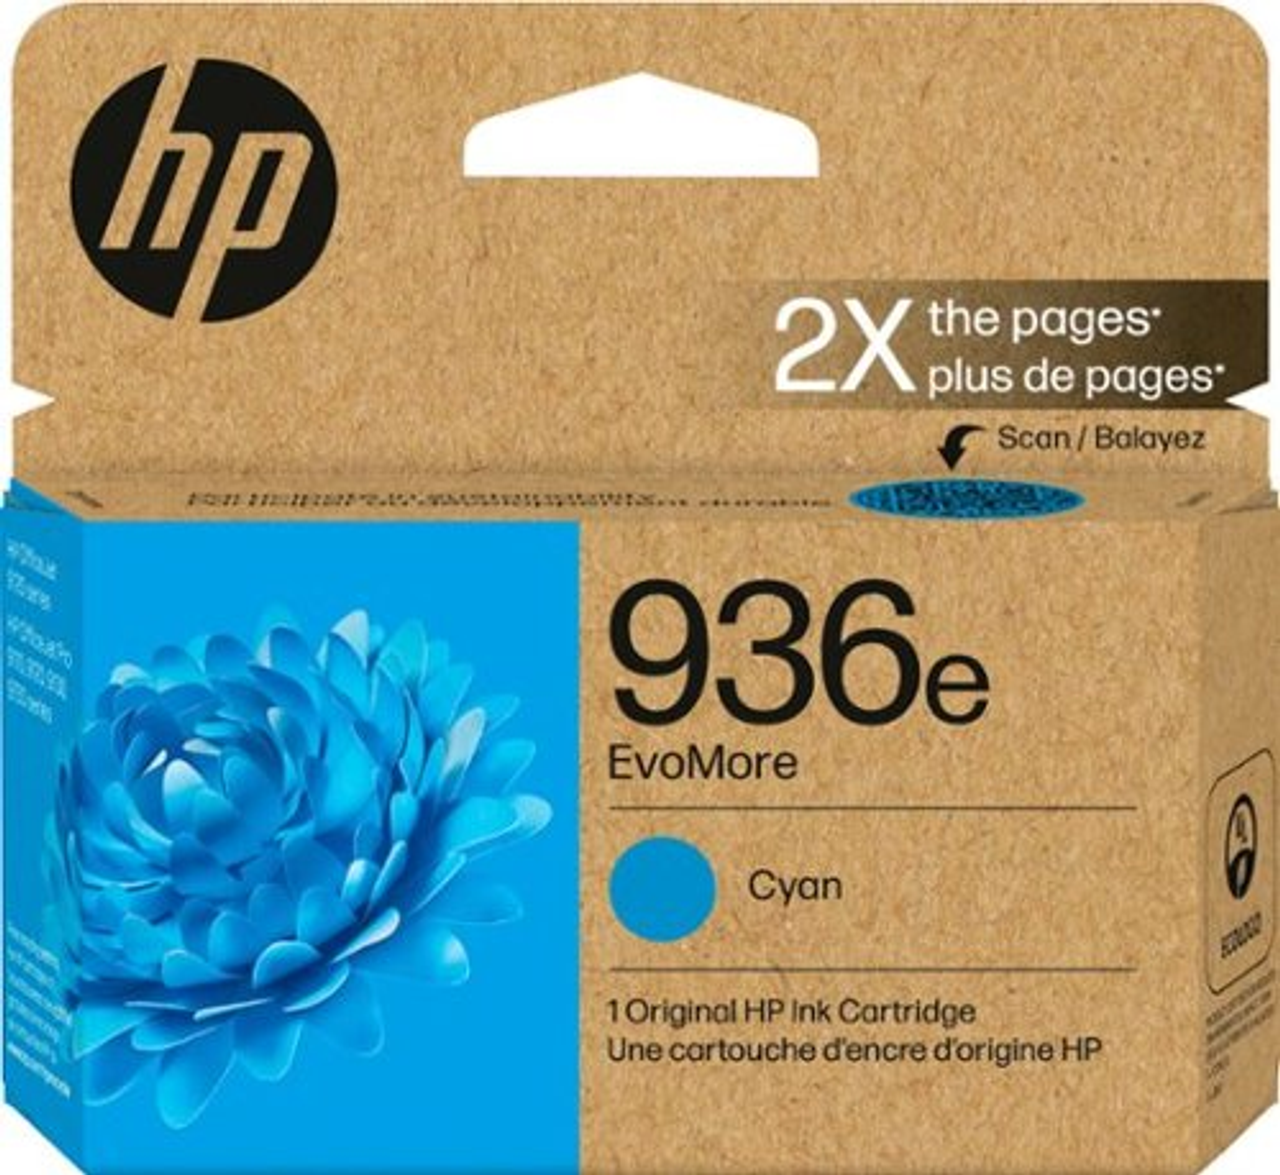 HP - 936e EvoMore Ink Cartridge - Cyan